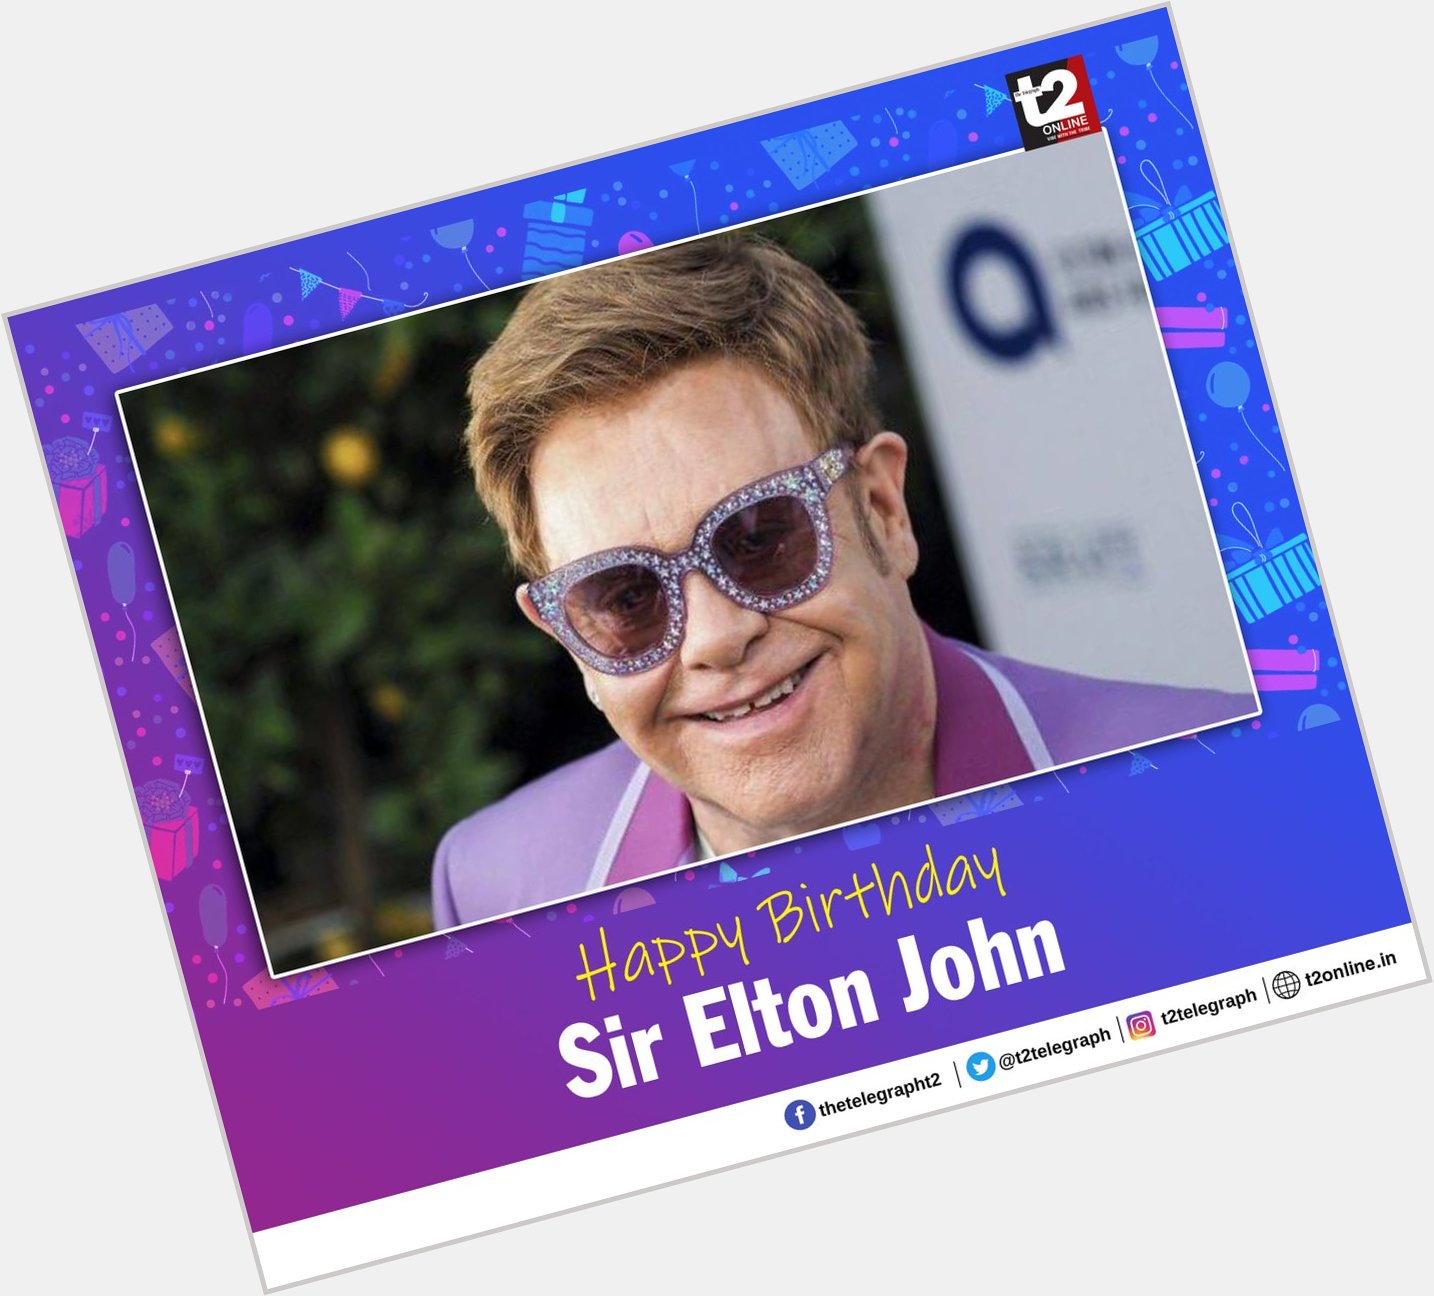 Happy birthday to the flashy and fantastical Elton John 